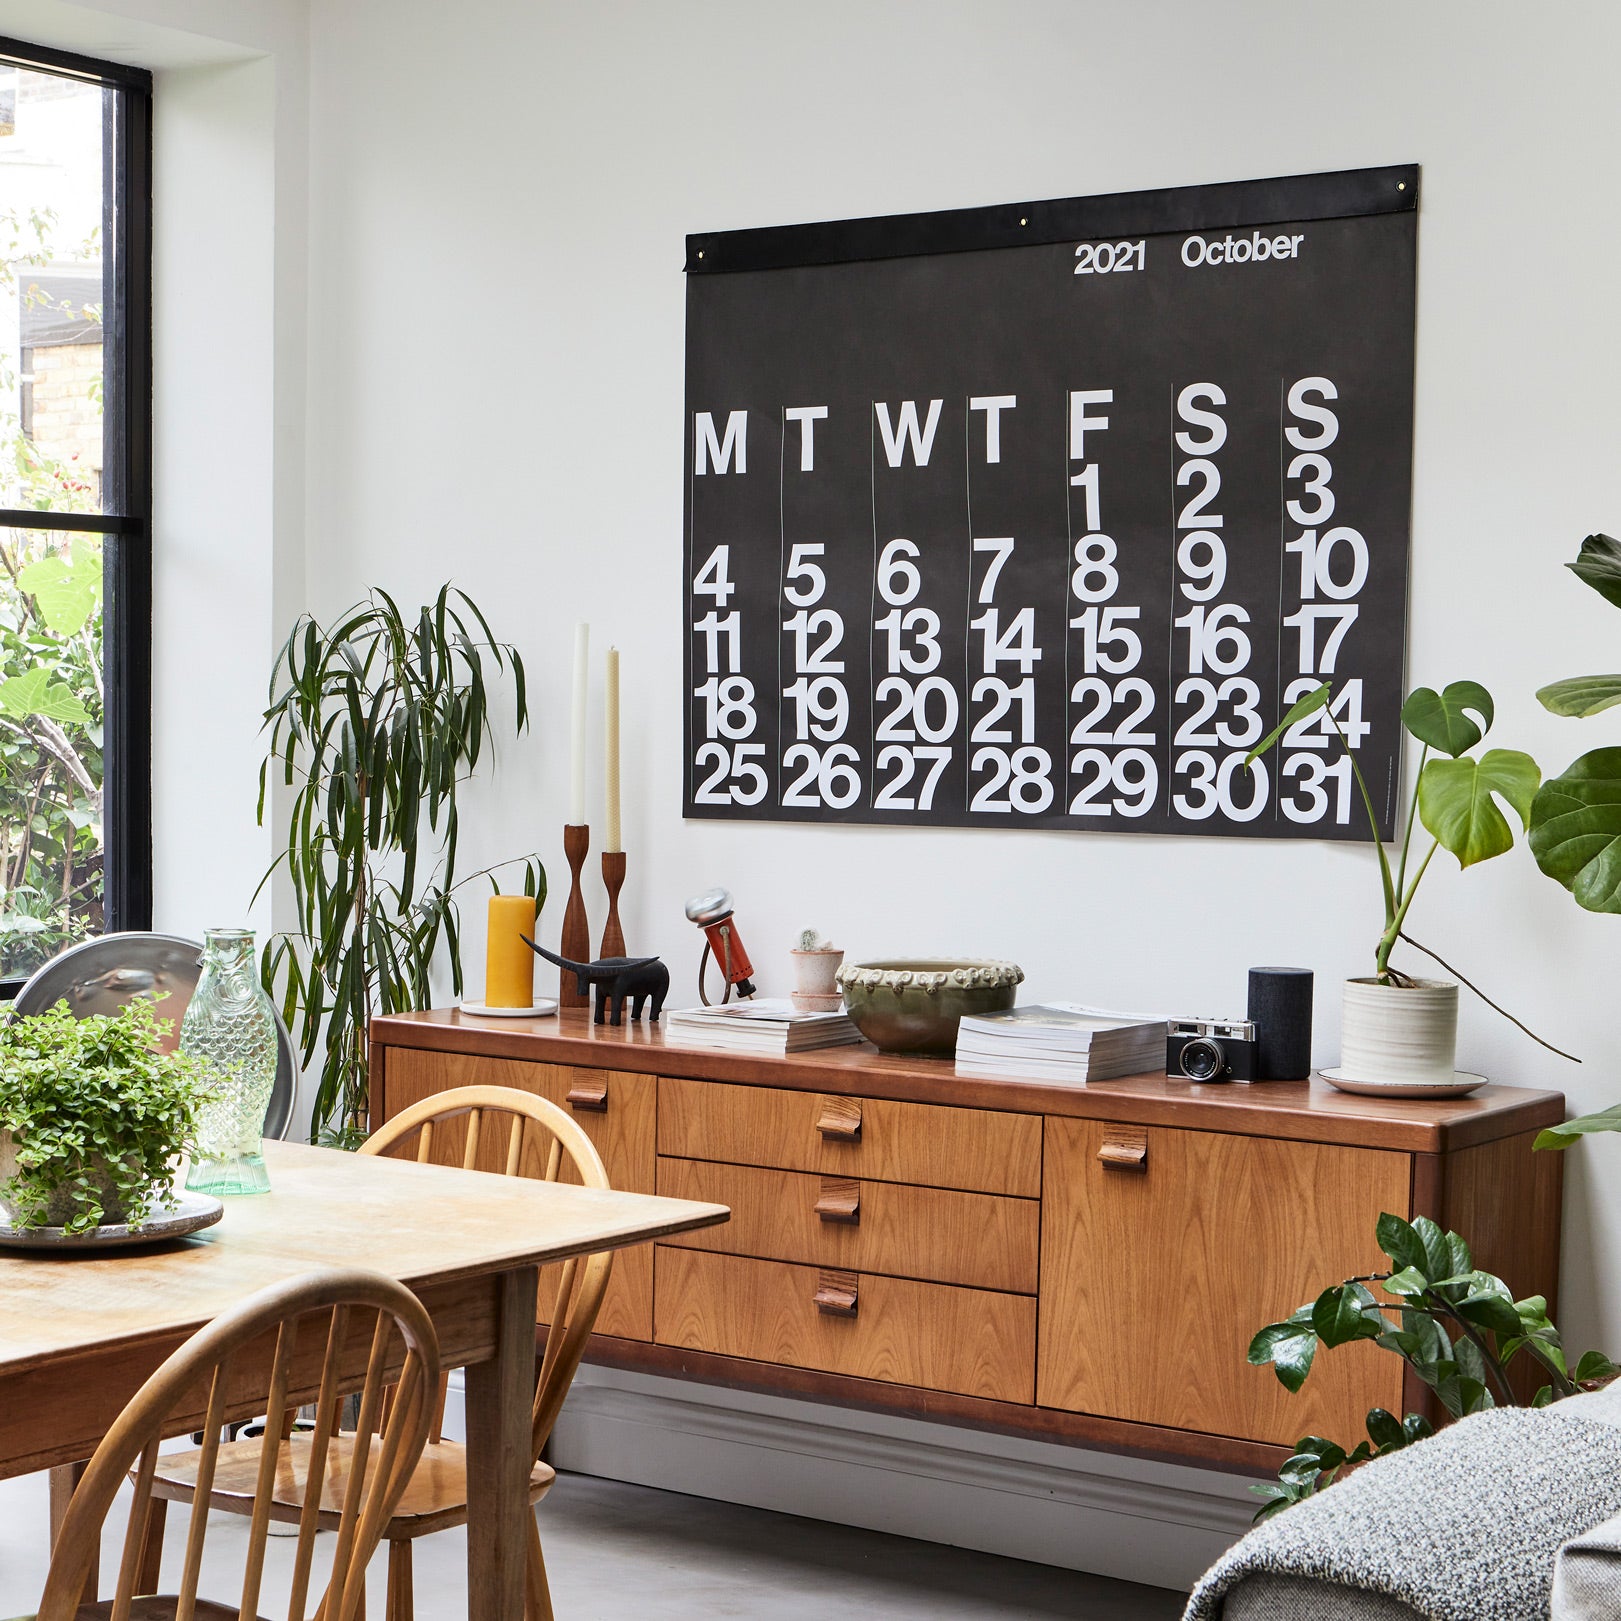 stendig-calendar-via-megbick-inspired-homes-white-decor-house-design